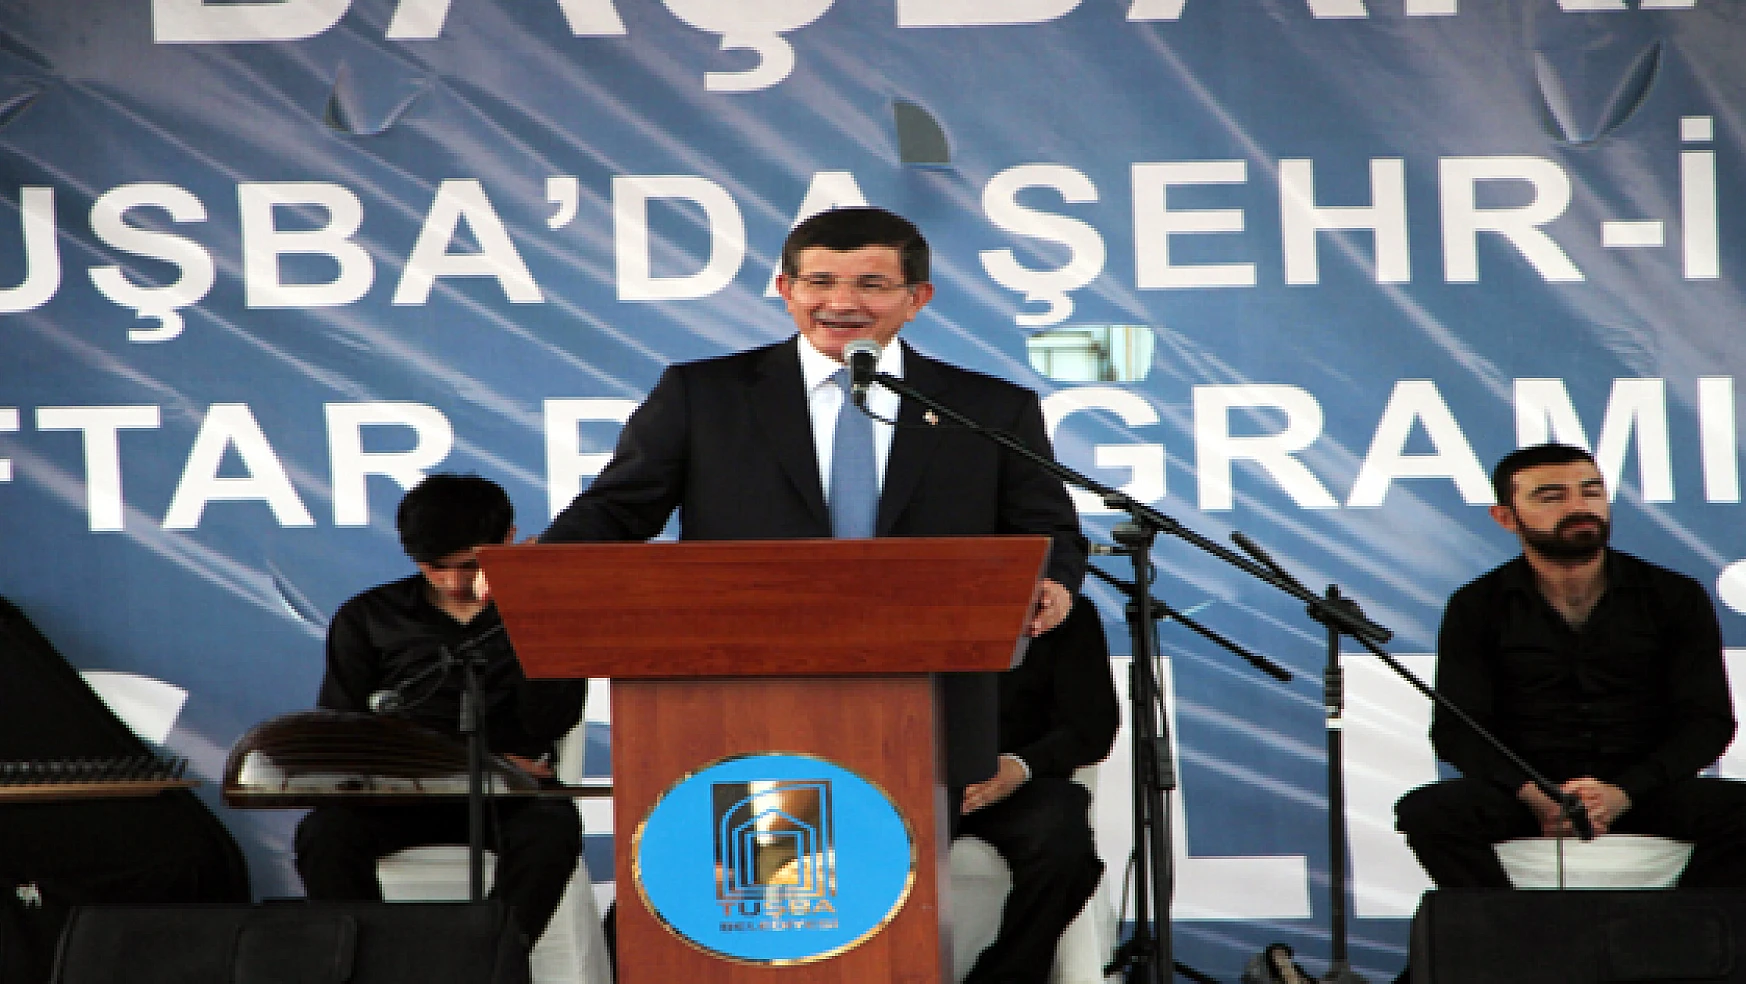 Başbakan Davutoğlu: Yeter deme vakti gelmiştir